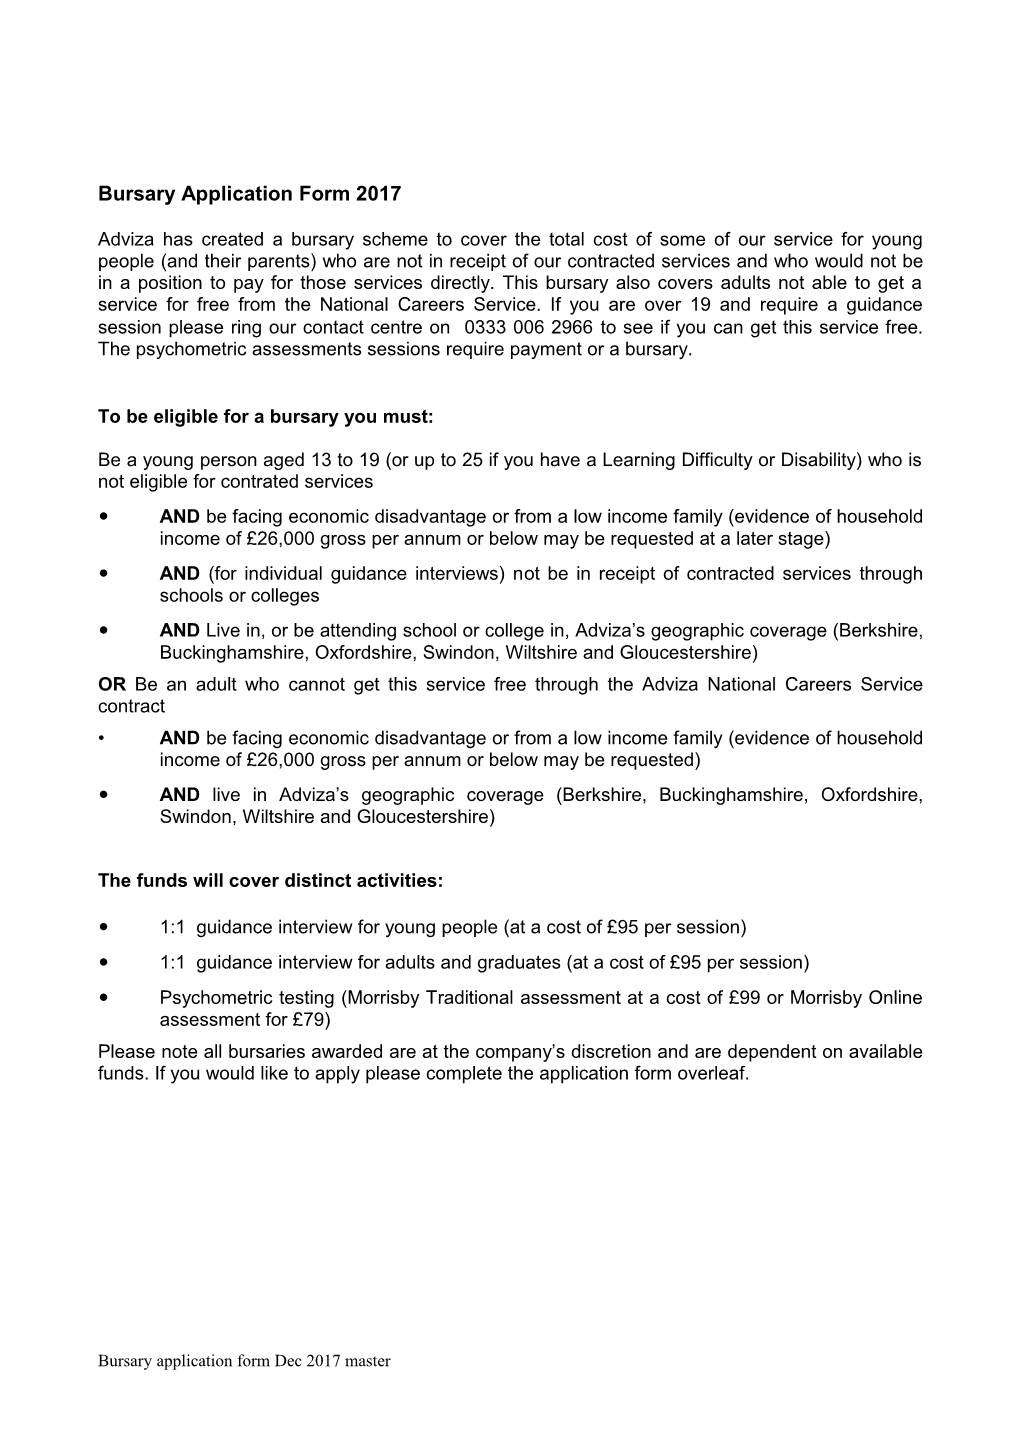 Bursary Application Form July 2014